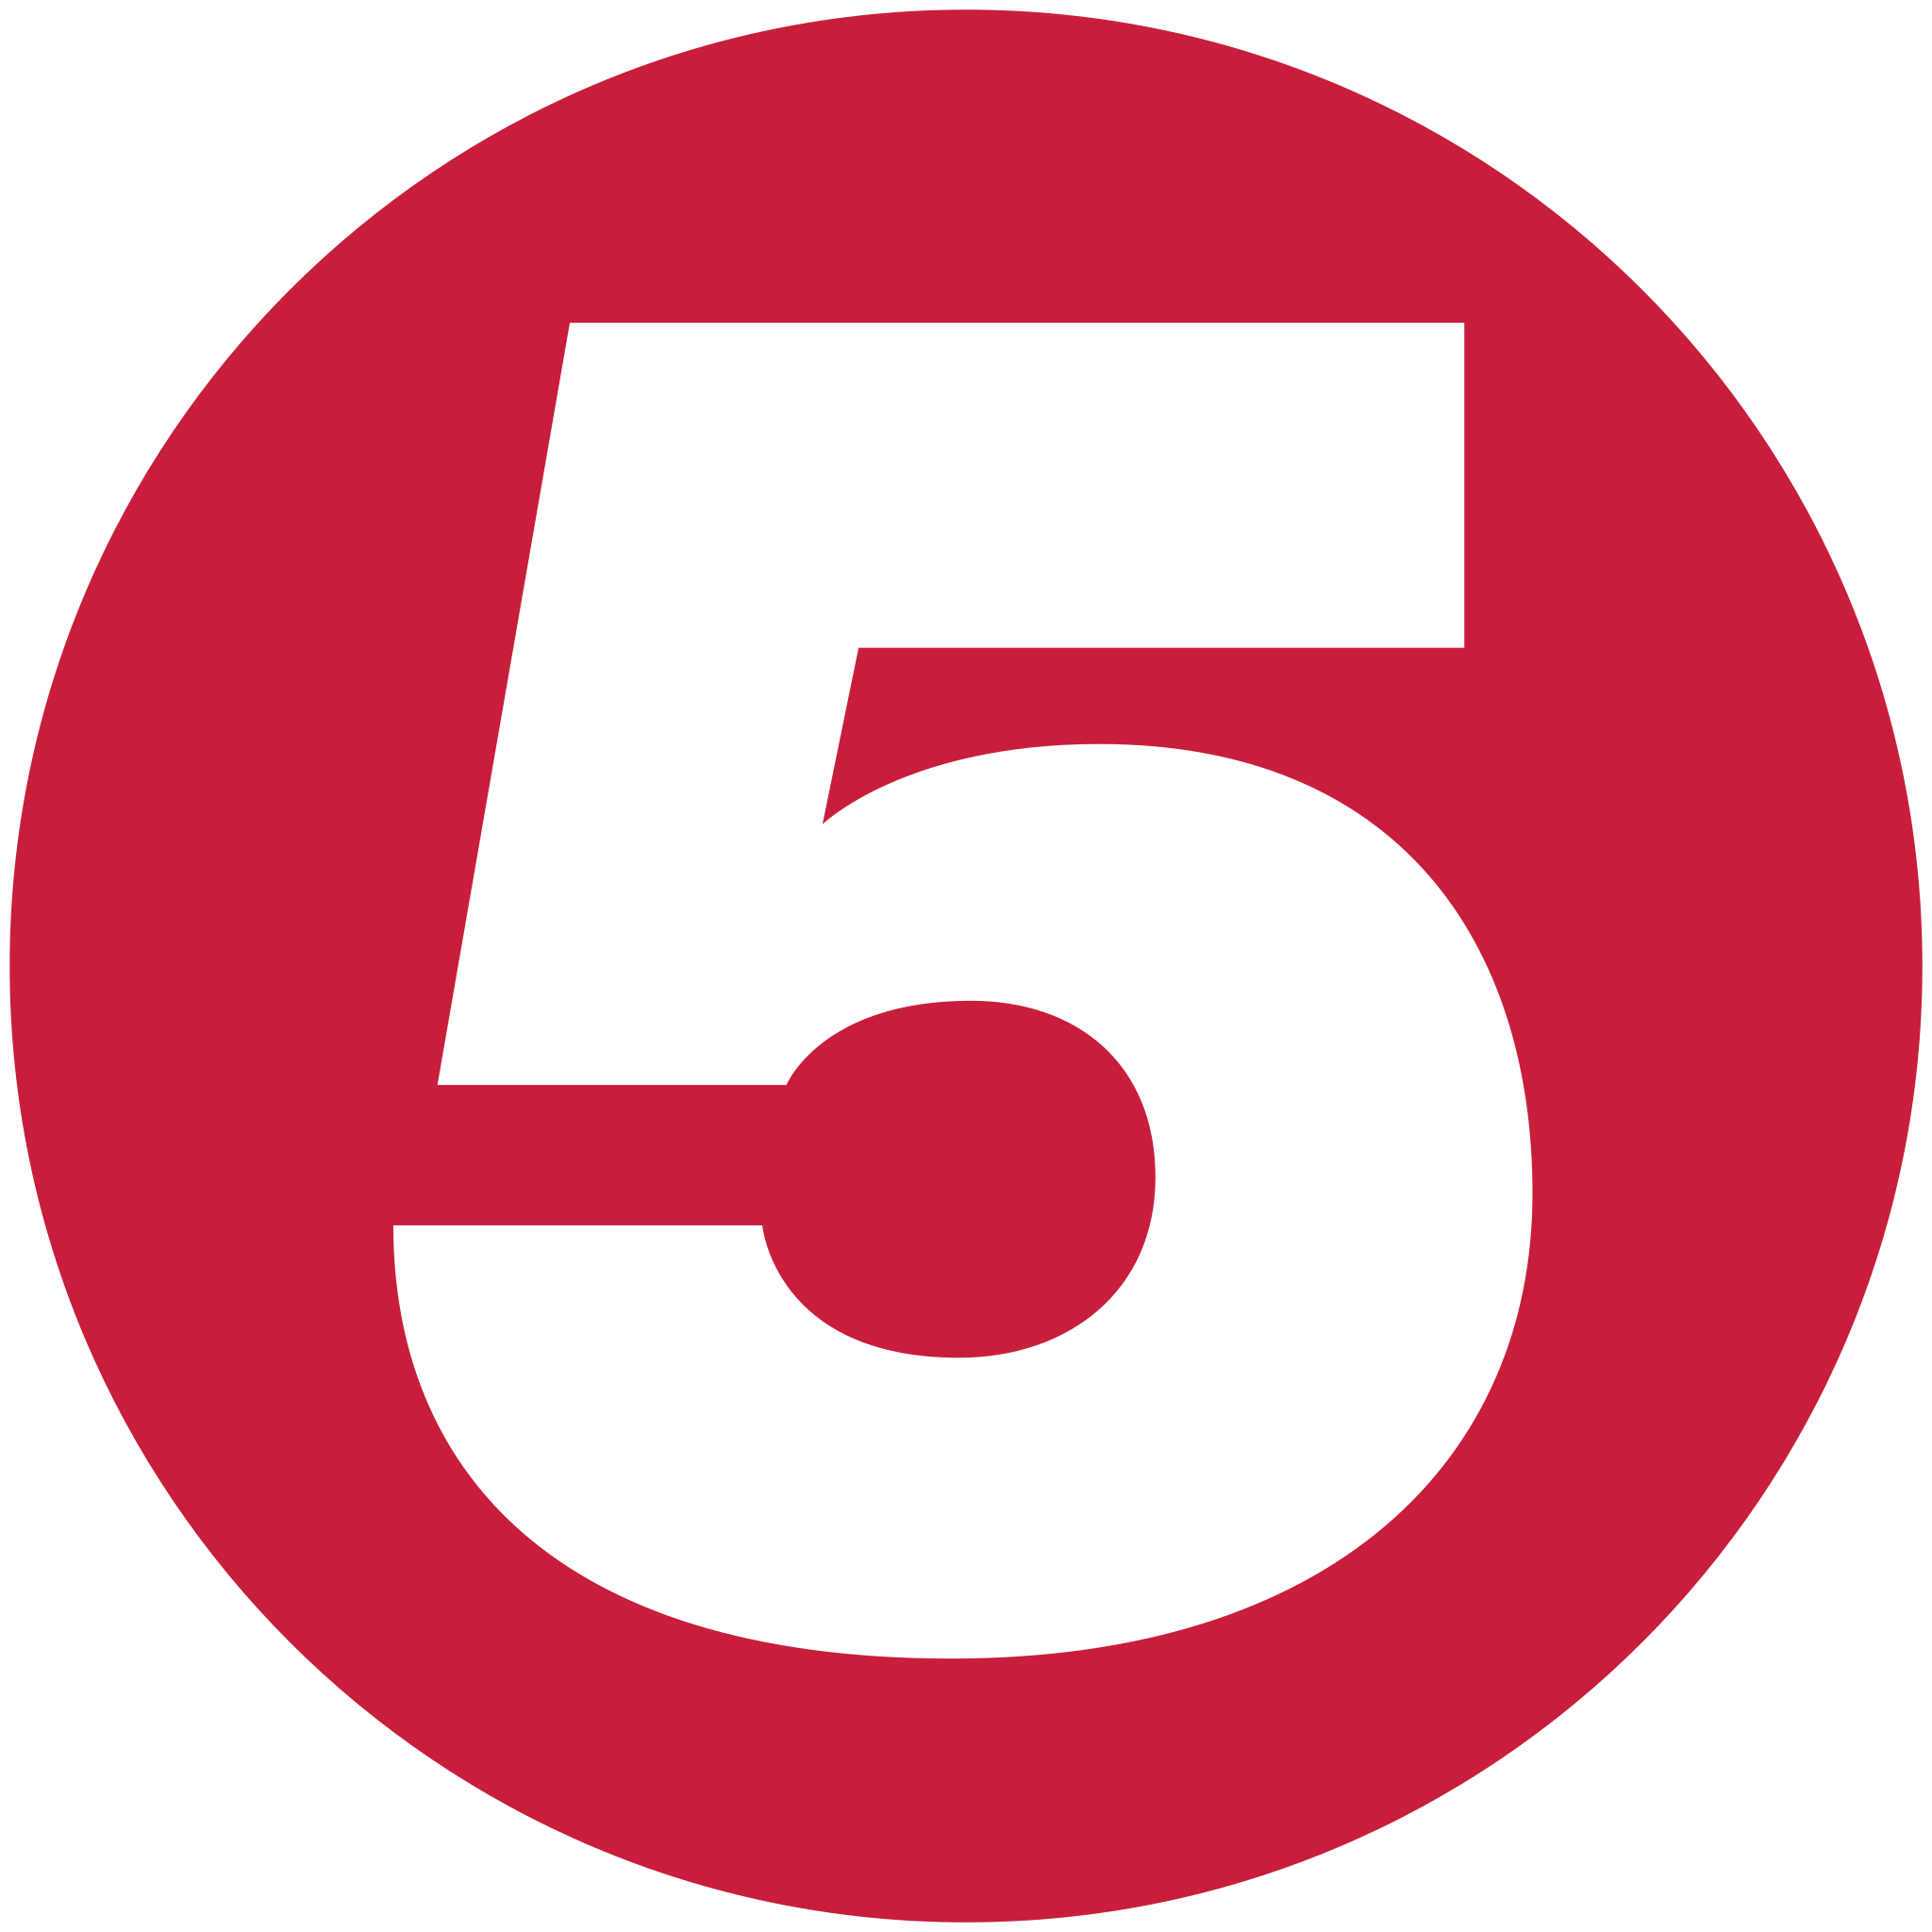 File:Channel 5 logo 2011.svg - Wikipedia